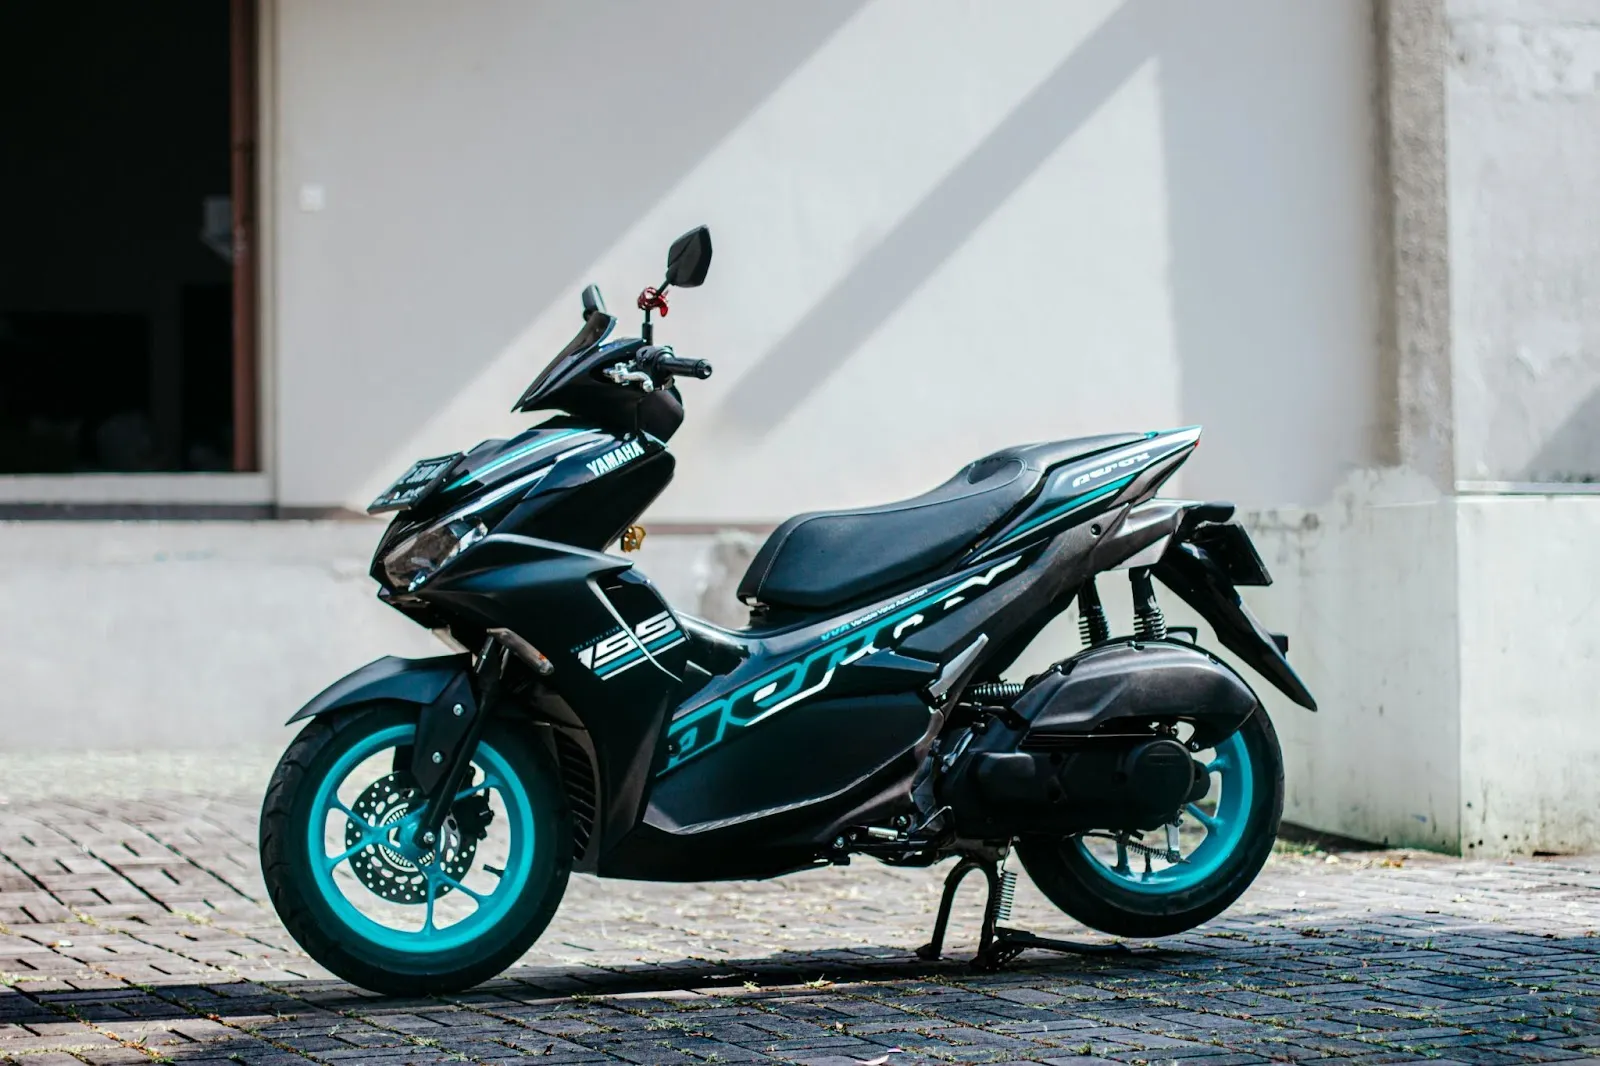 A black Yamaha Aerox motorbike with aqua blue accent